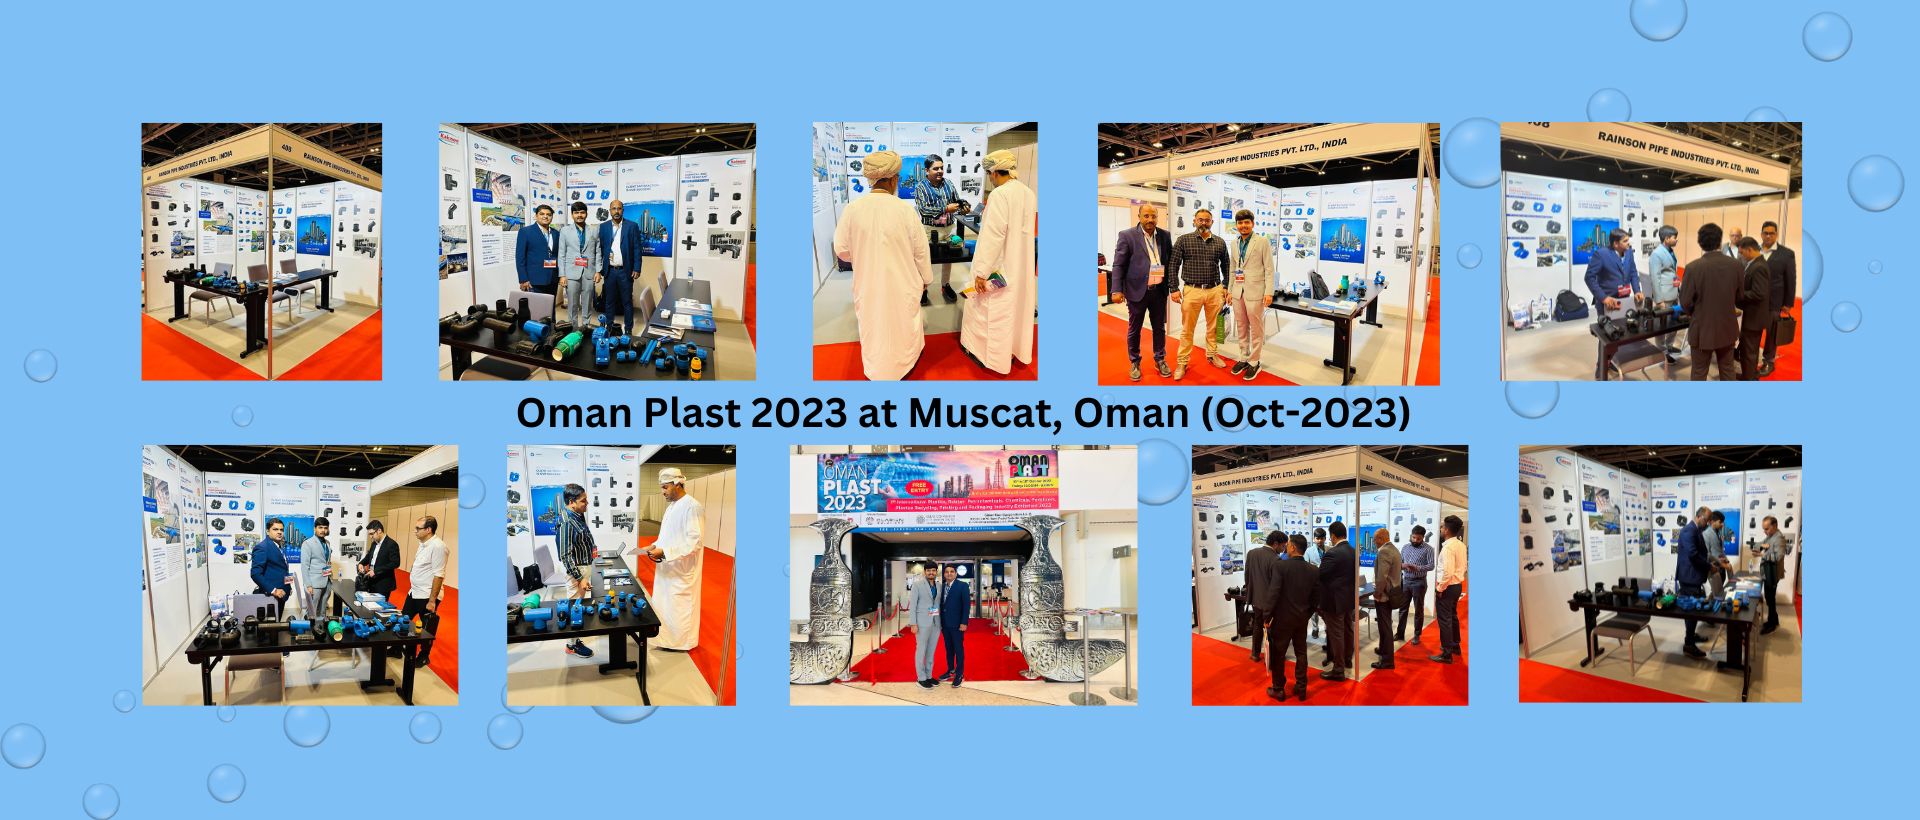 Oman Plast Exhibition 2023